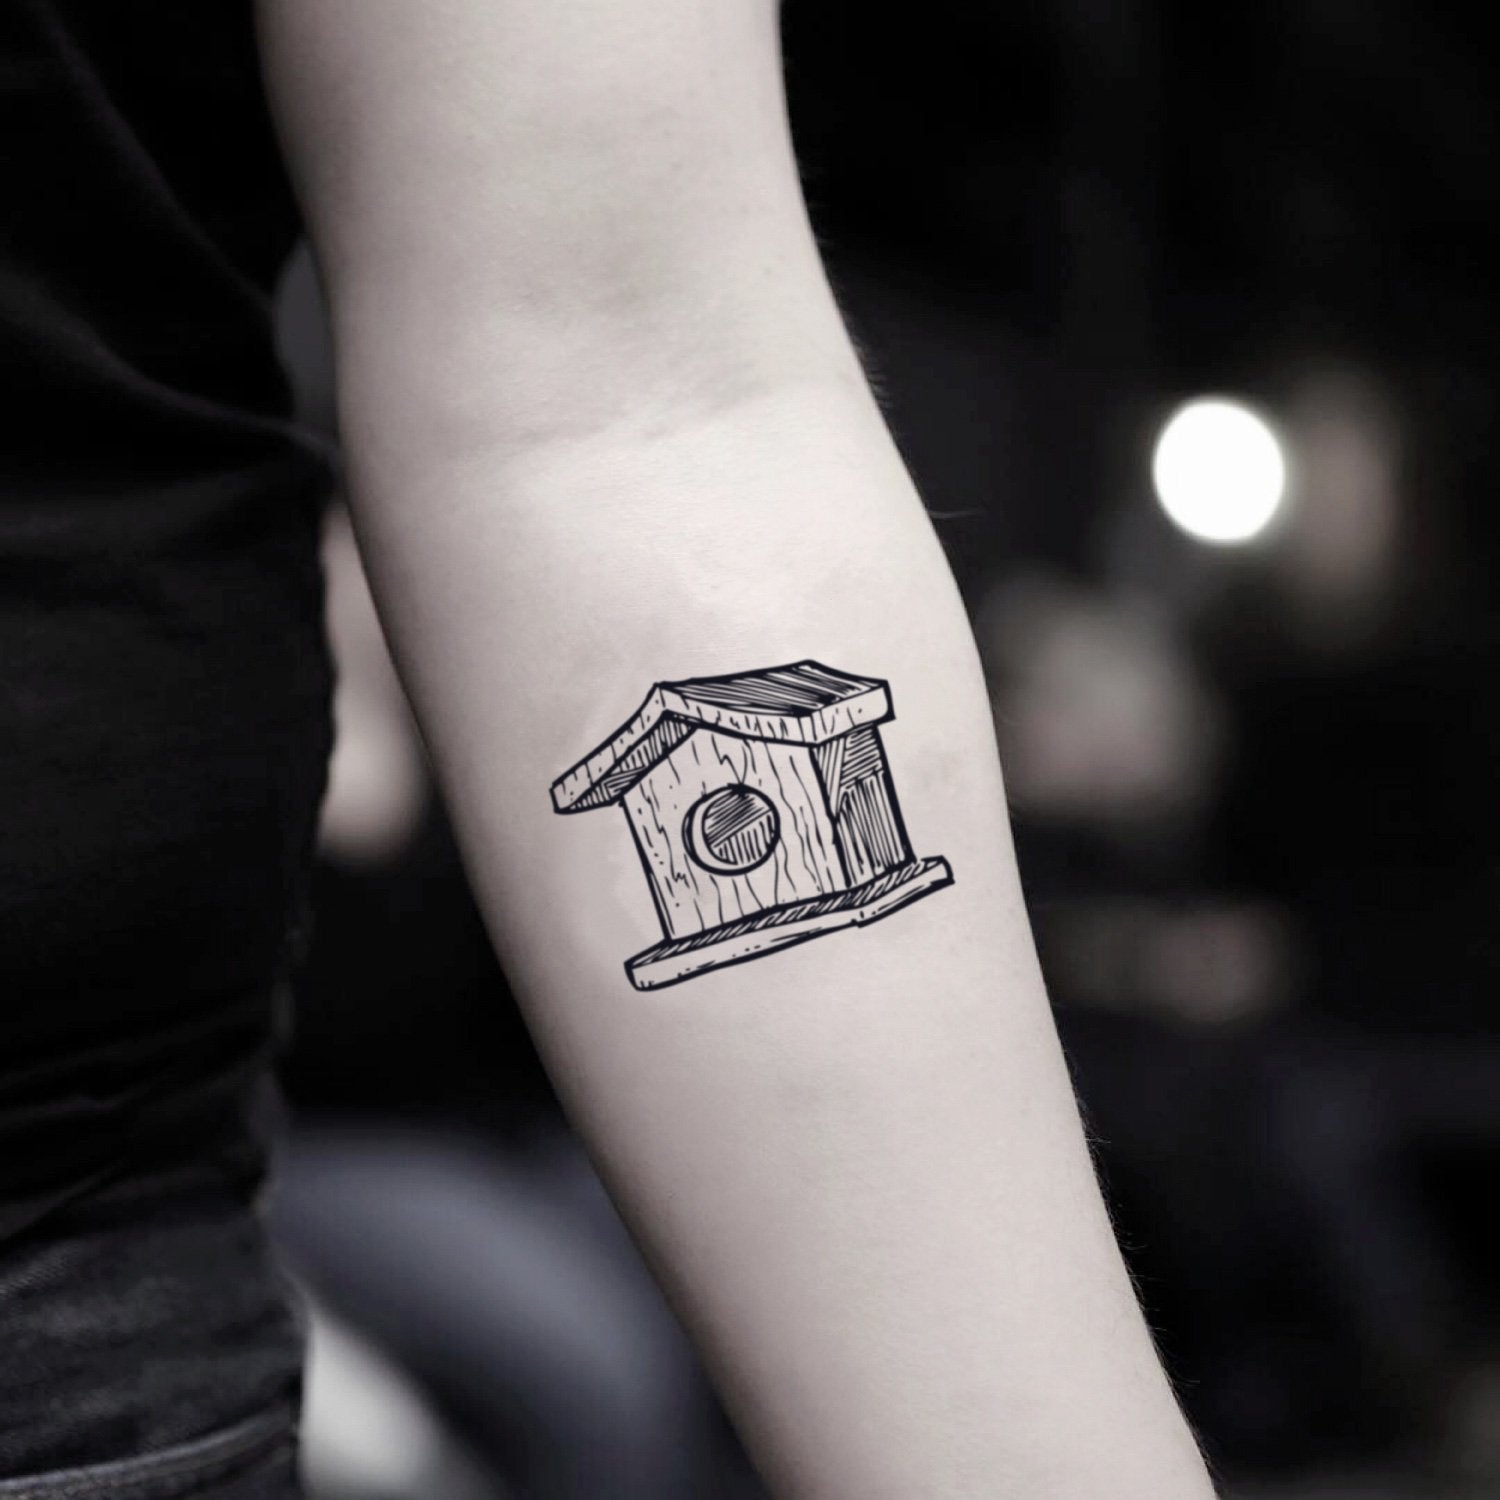 fake small birdhouse illustrative temporary tattoo sticker design idea on inner arm